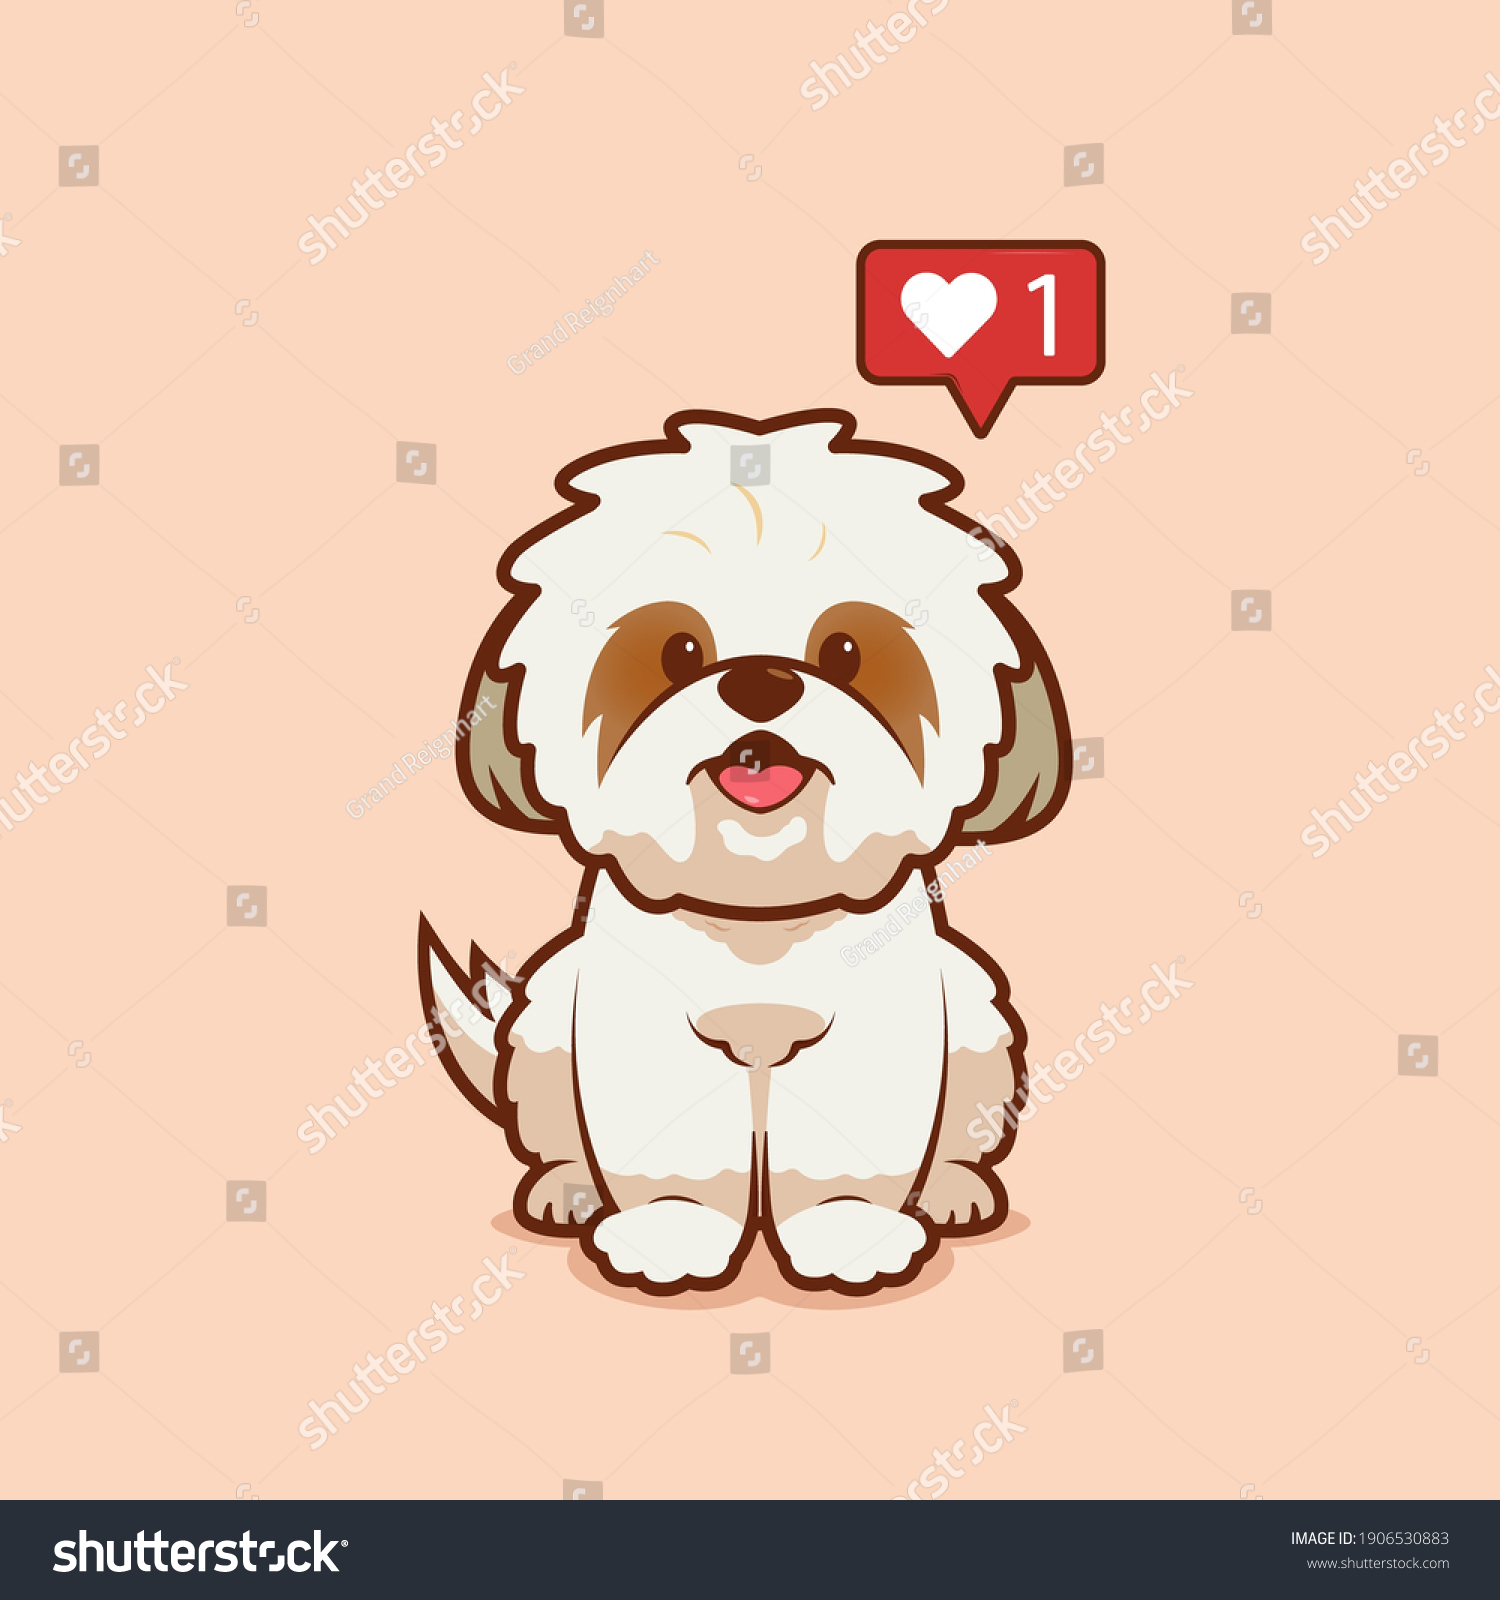 SVG of Cartoon illustration of shih tzu dog sitting with love icon. Vector illustration of shih tzu dog svg